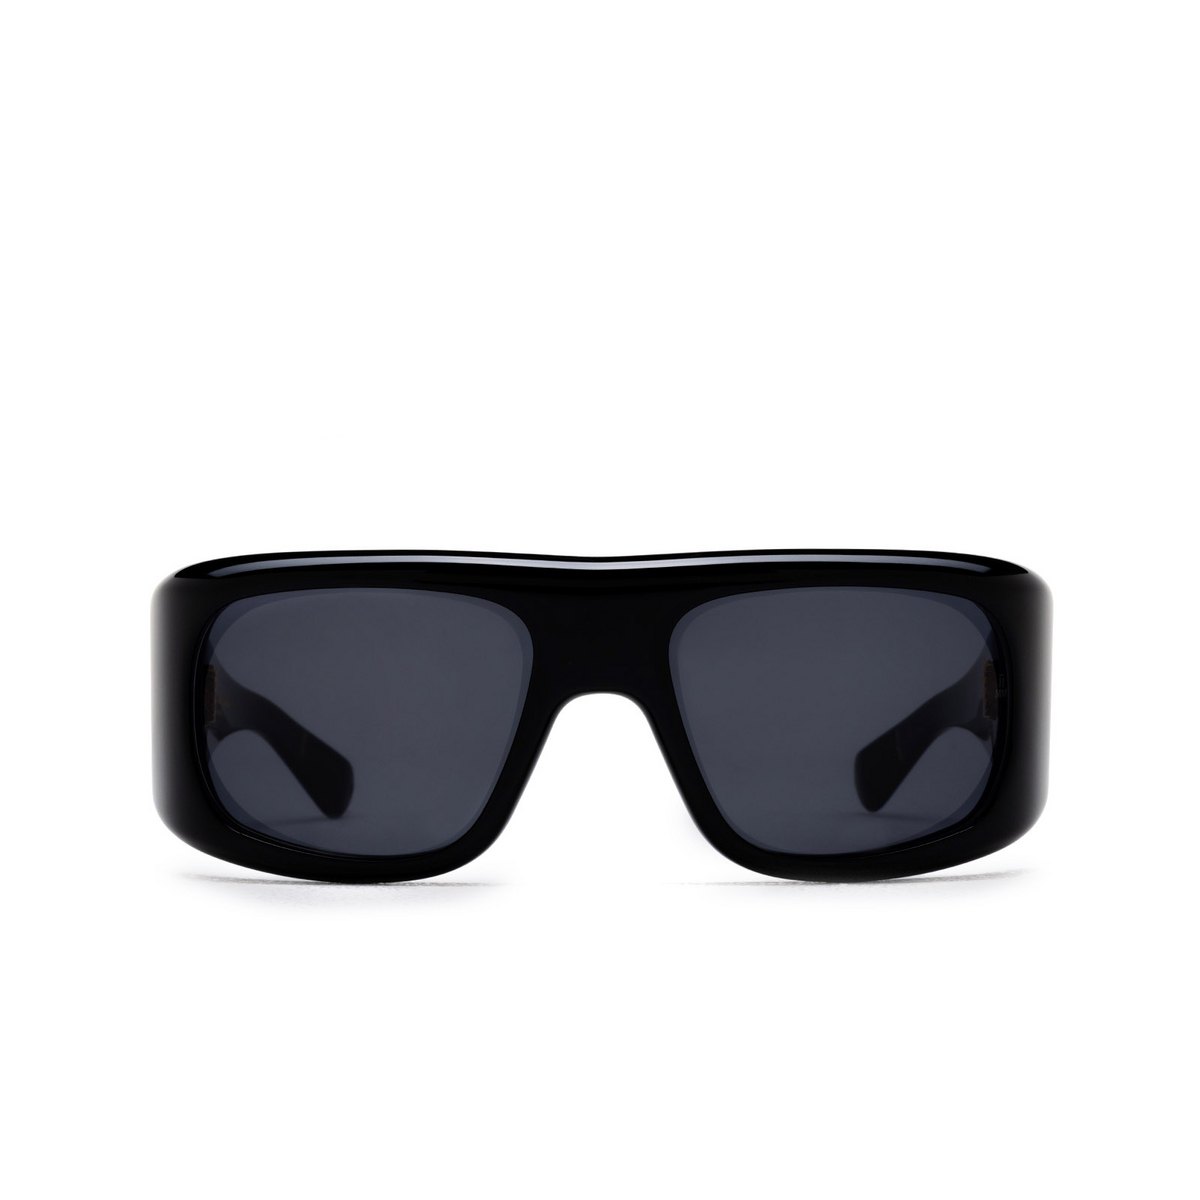 Jacques Marie Mage BENSON Sunglasses BLACK - front view